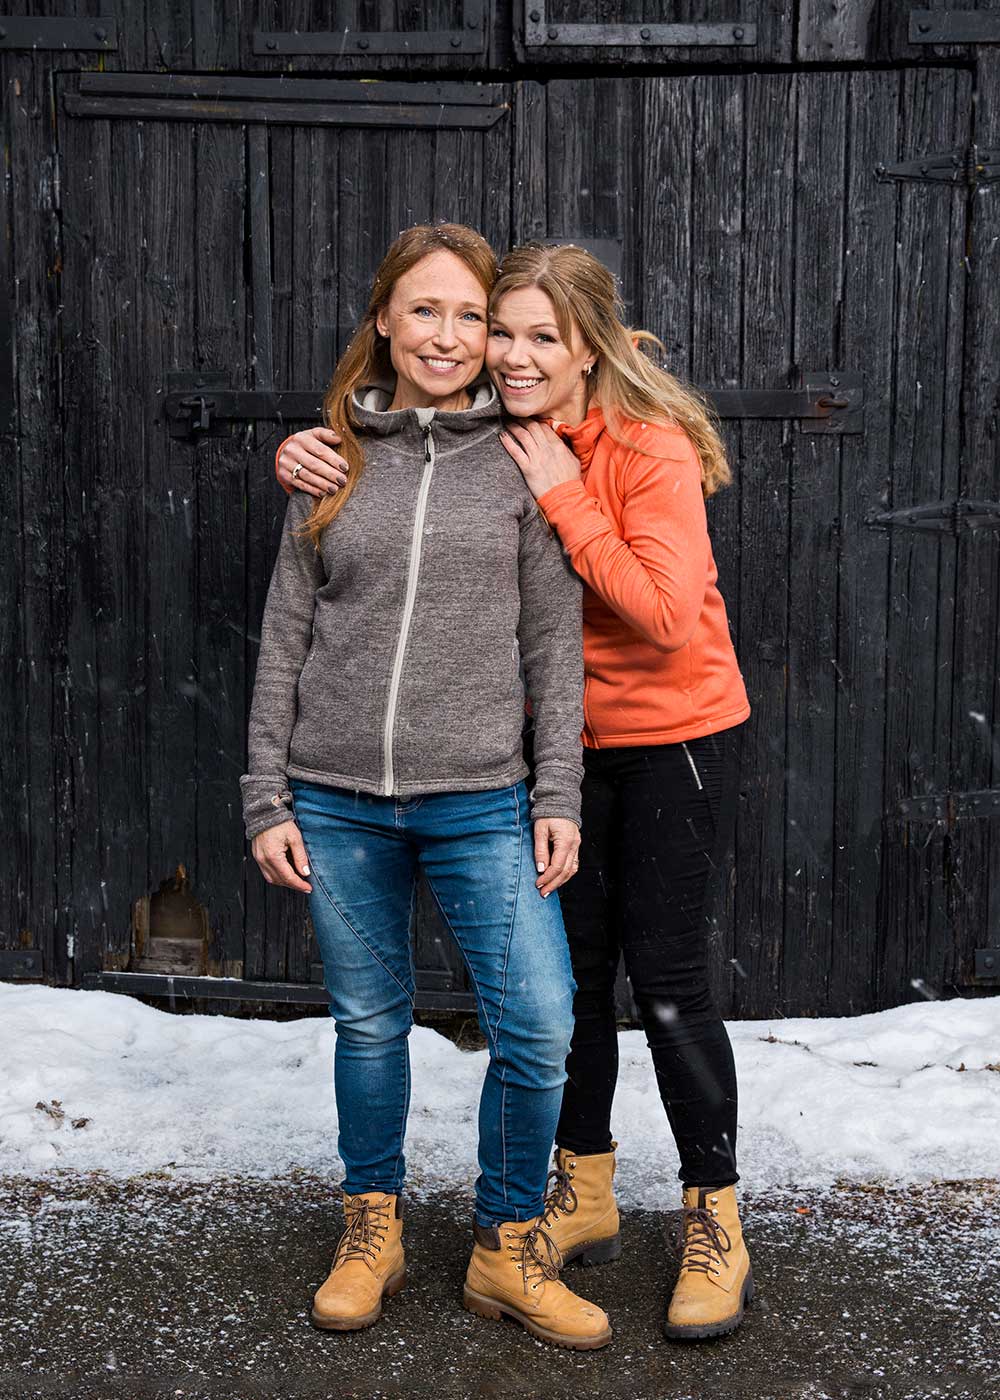 Maria Frykman and Camilla Schmidt